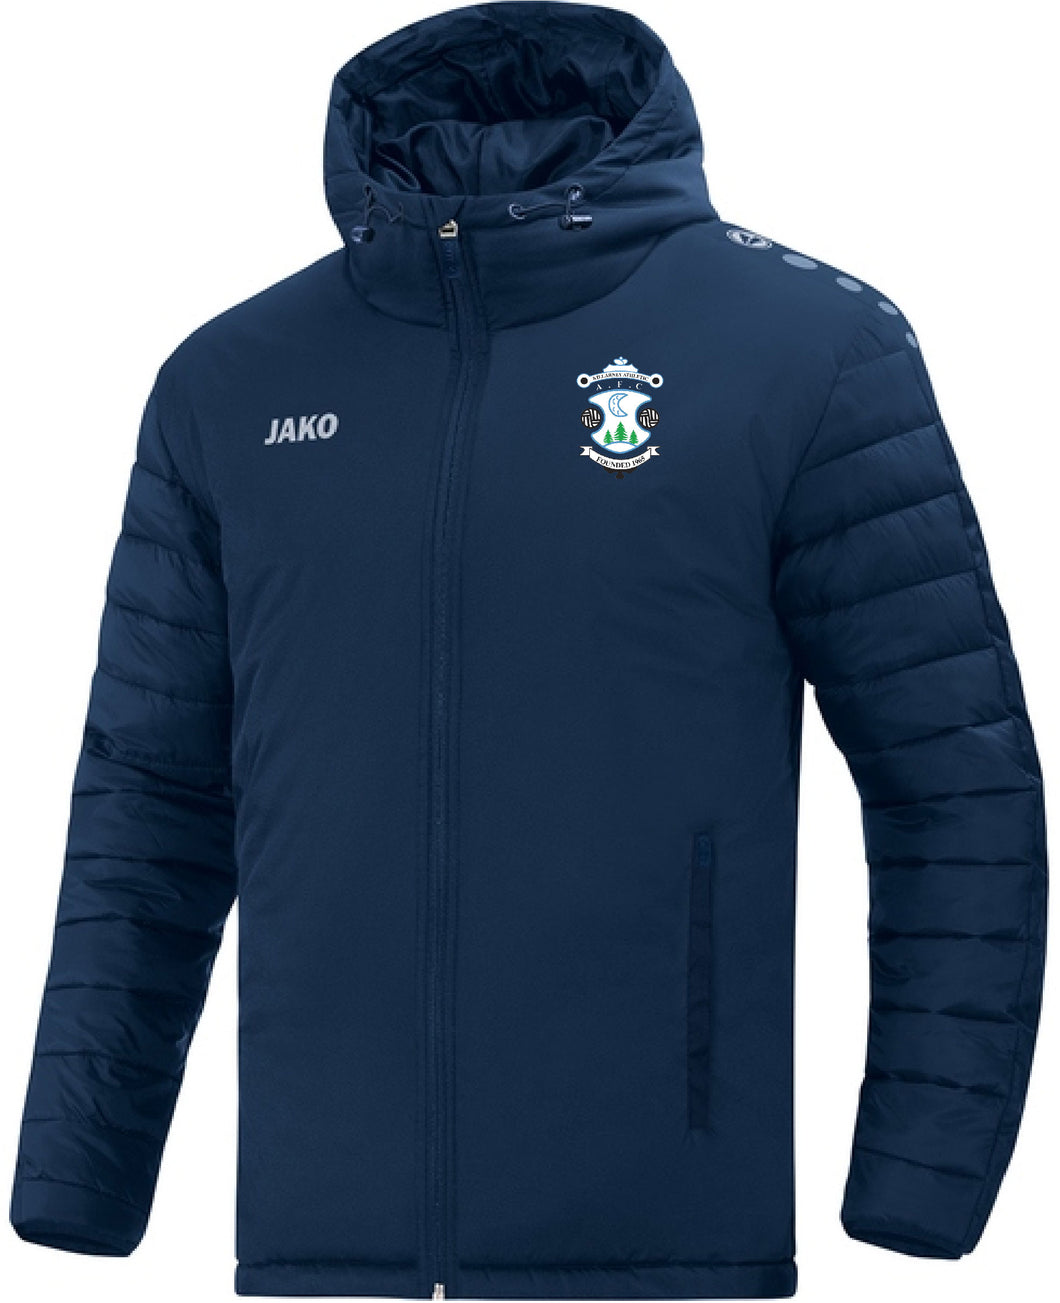 Adult JAKO Killarney Athletic Winter Jacket 7201KATH